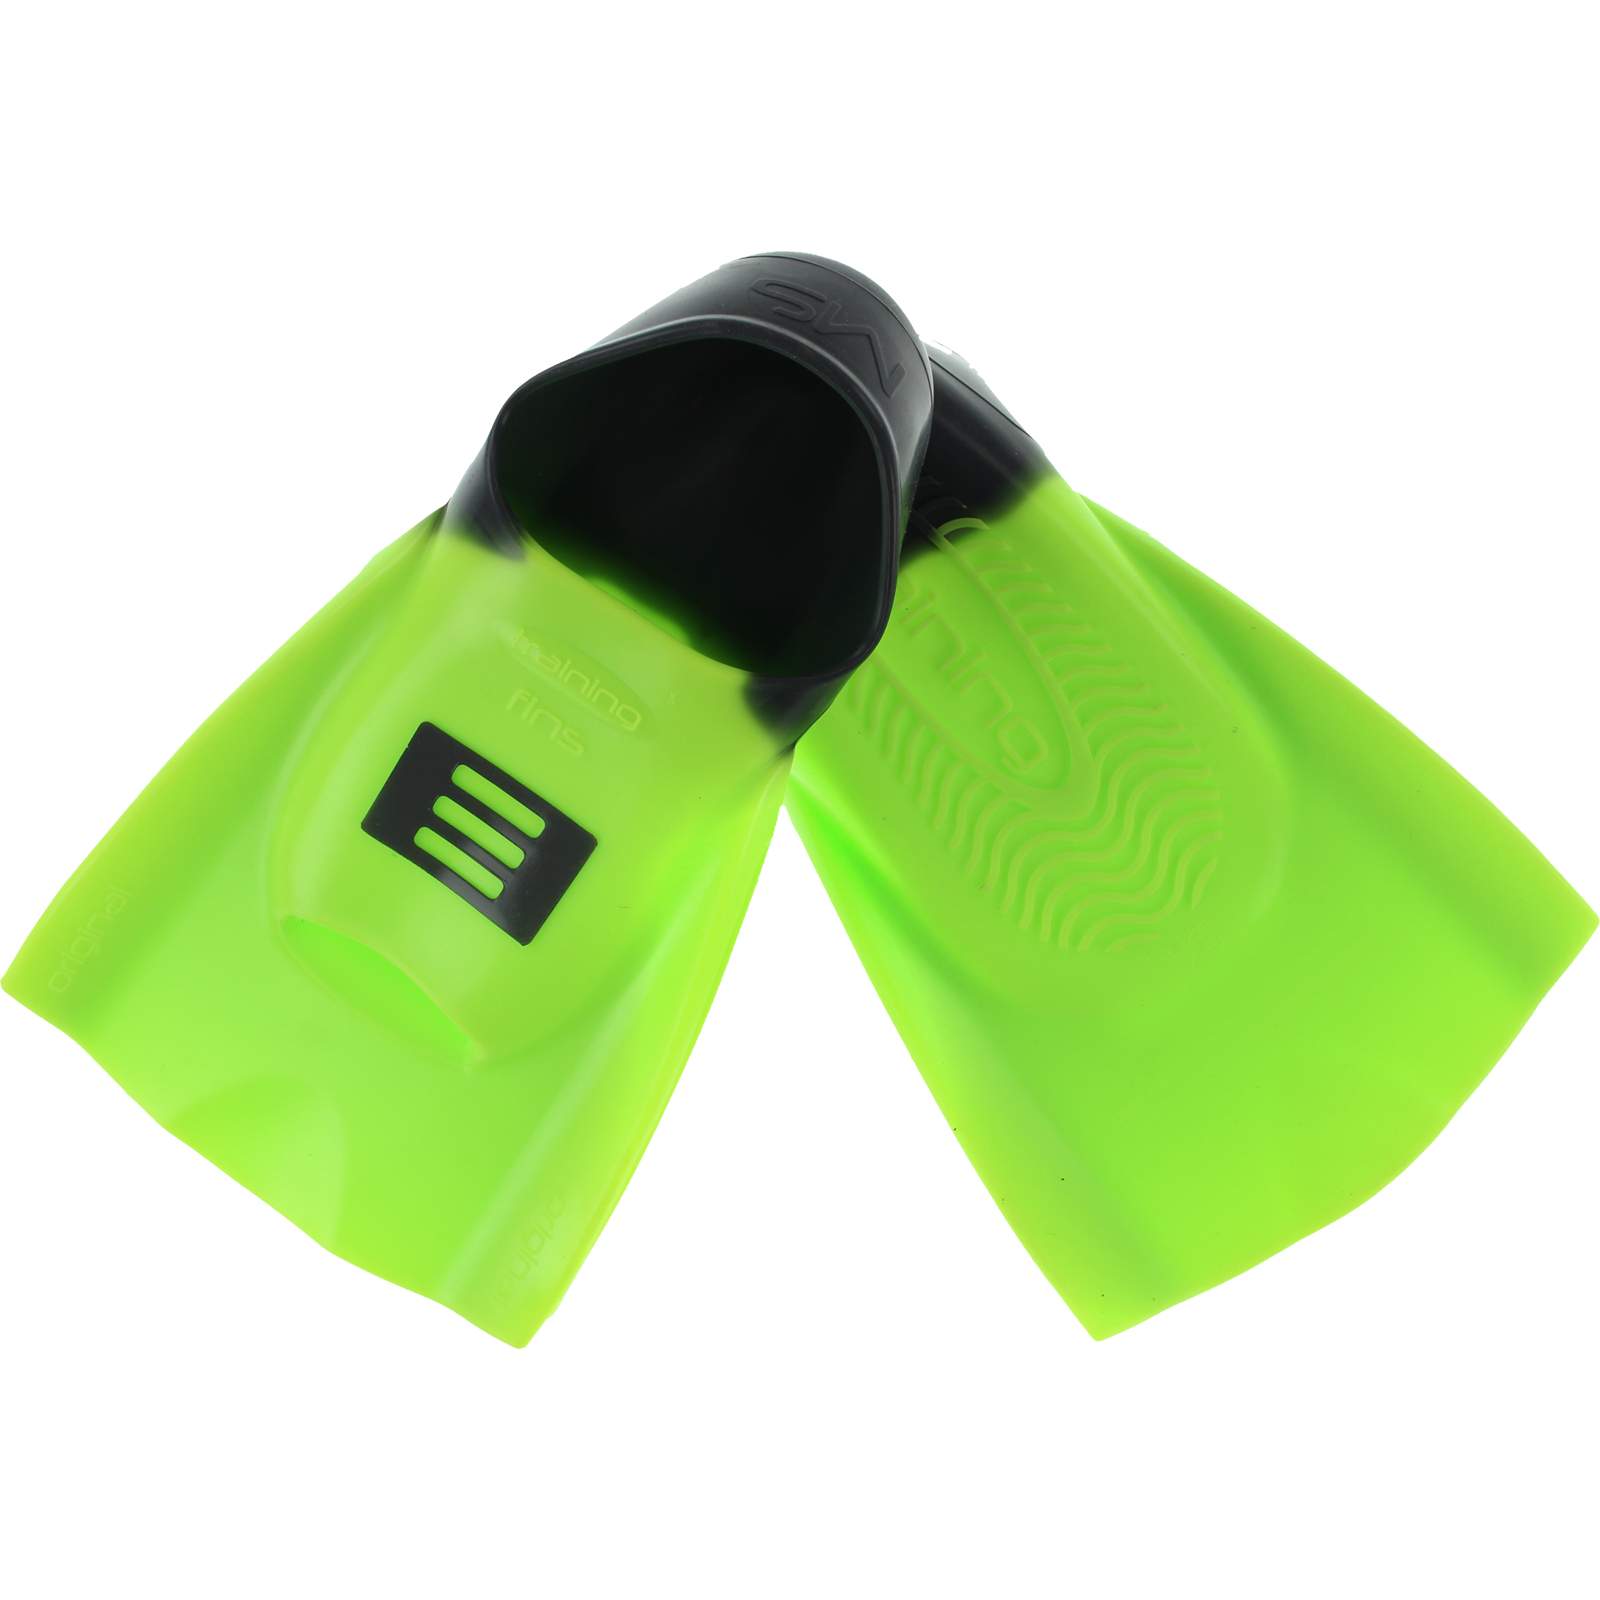 DMC Training Swim Fins - LARGE Green/Charcoal (Size 10-11)